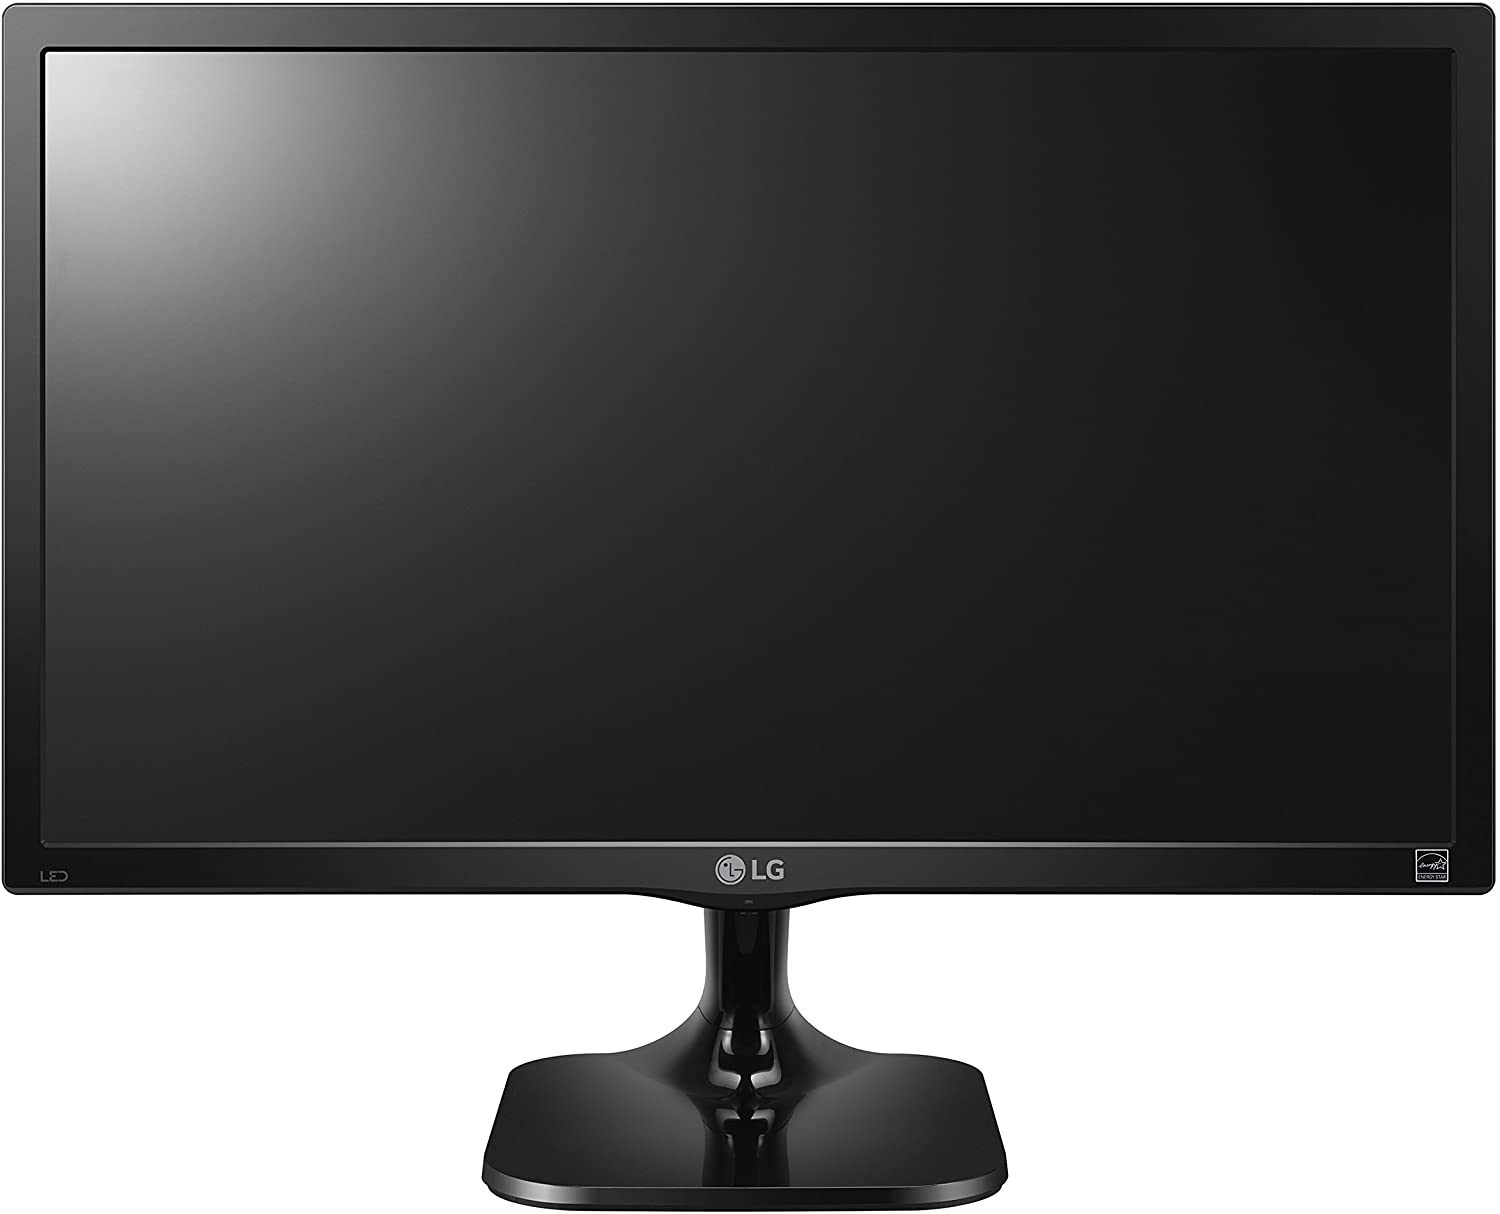 LG 24M47VQ 24-Inch LED-lit Monitor, Black